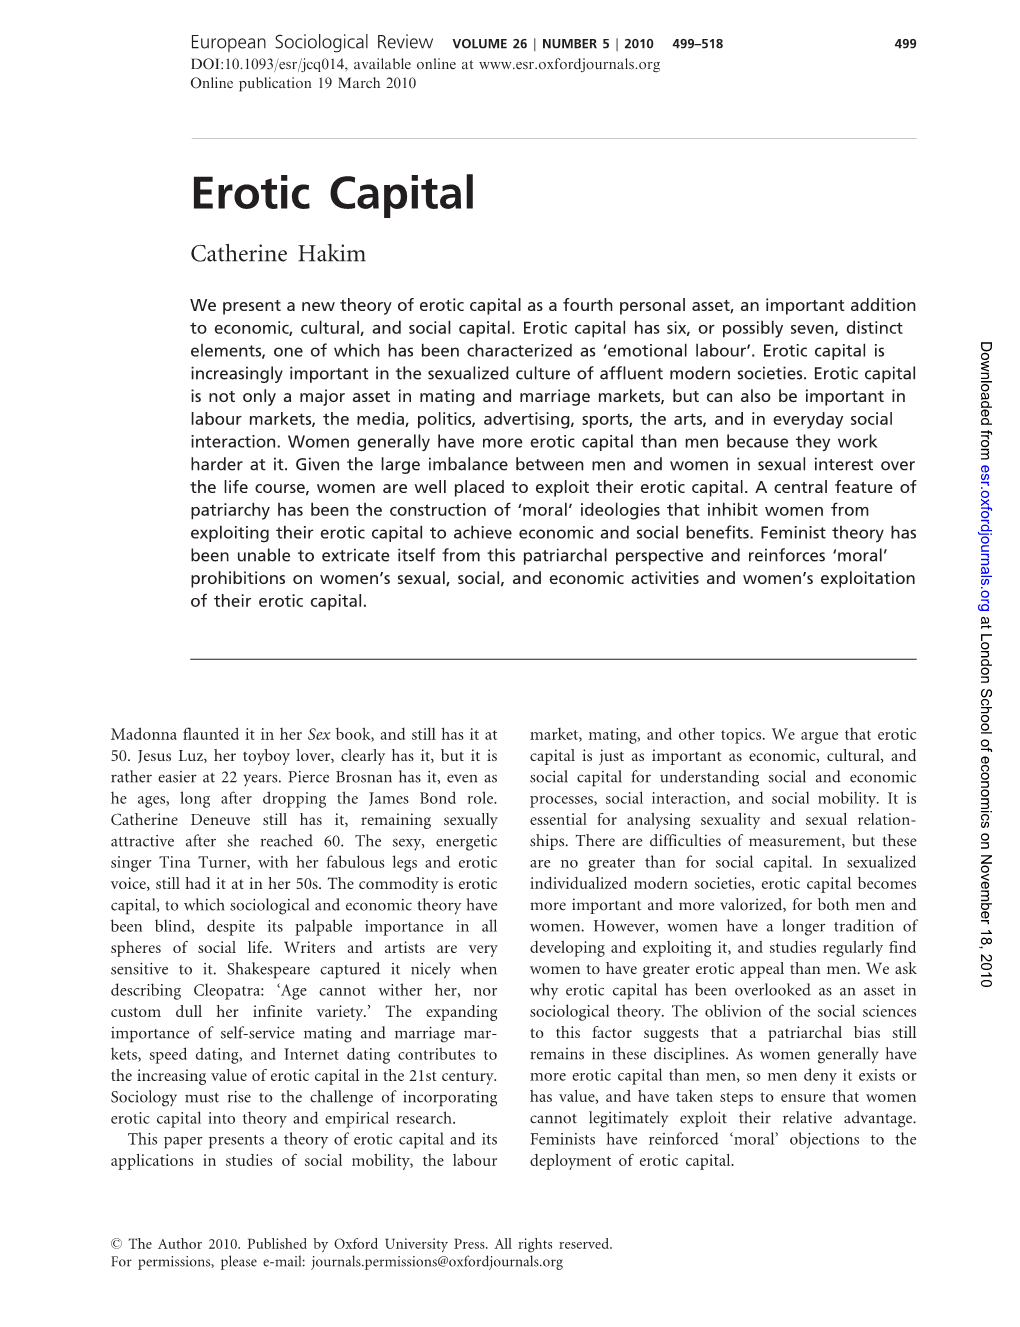 Erotic Capital Catherine Hakim